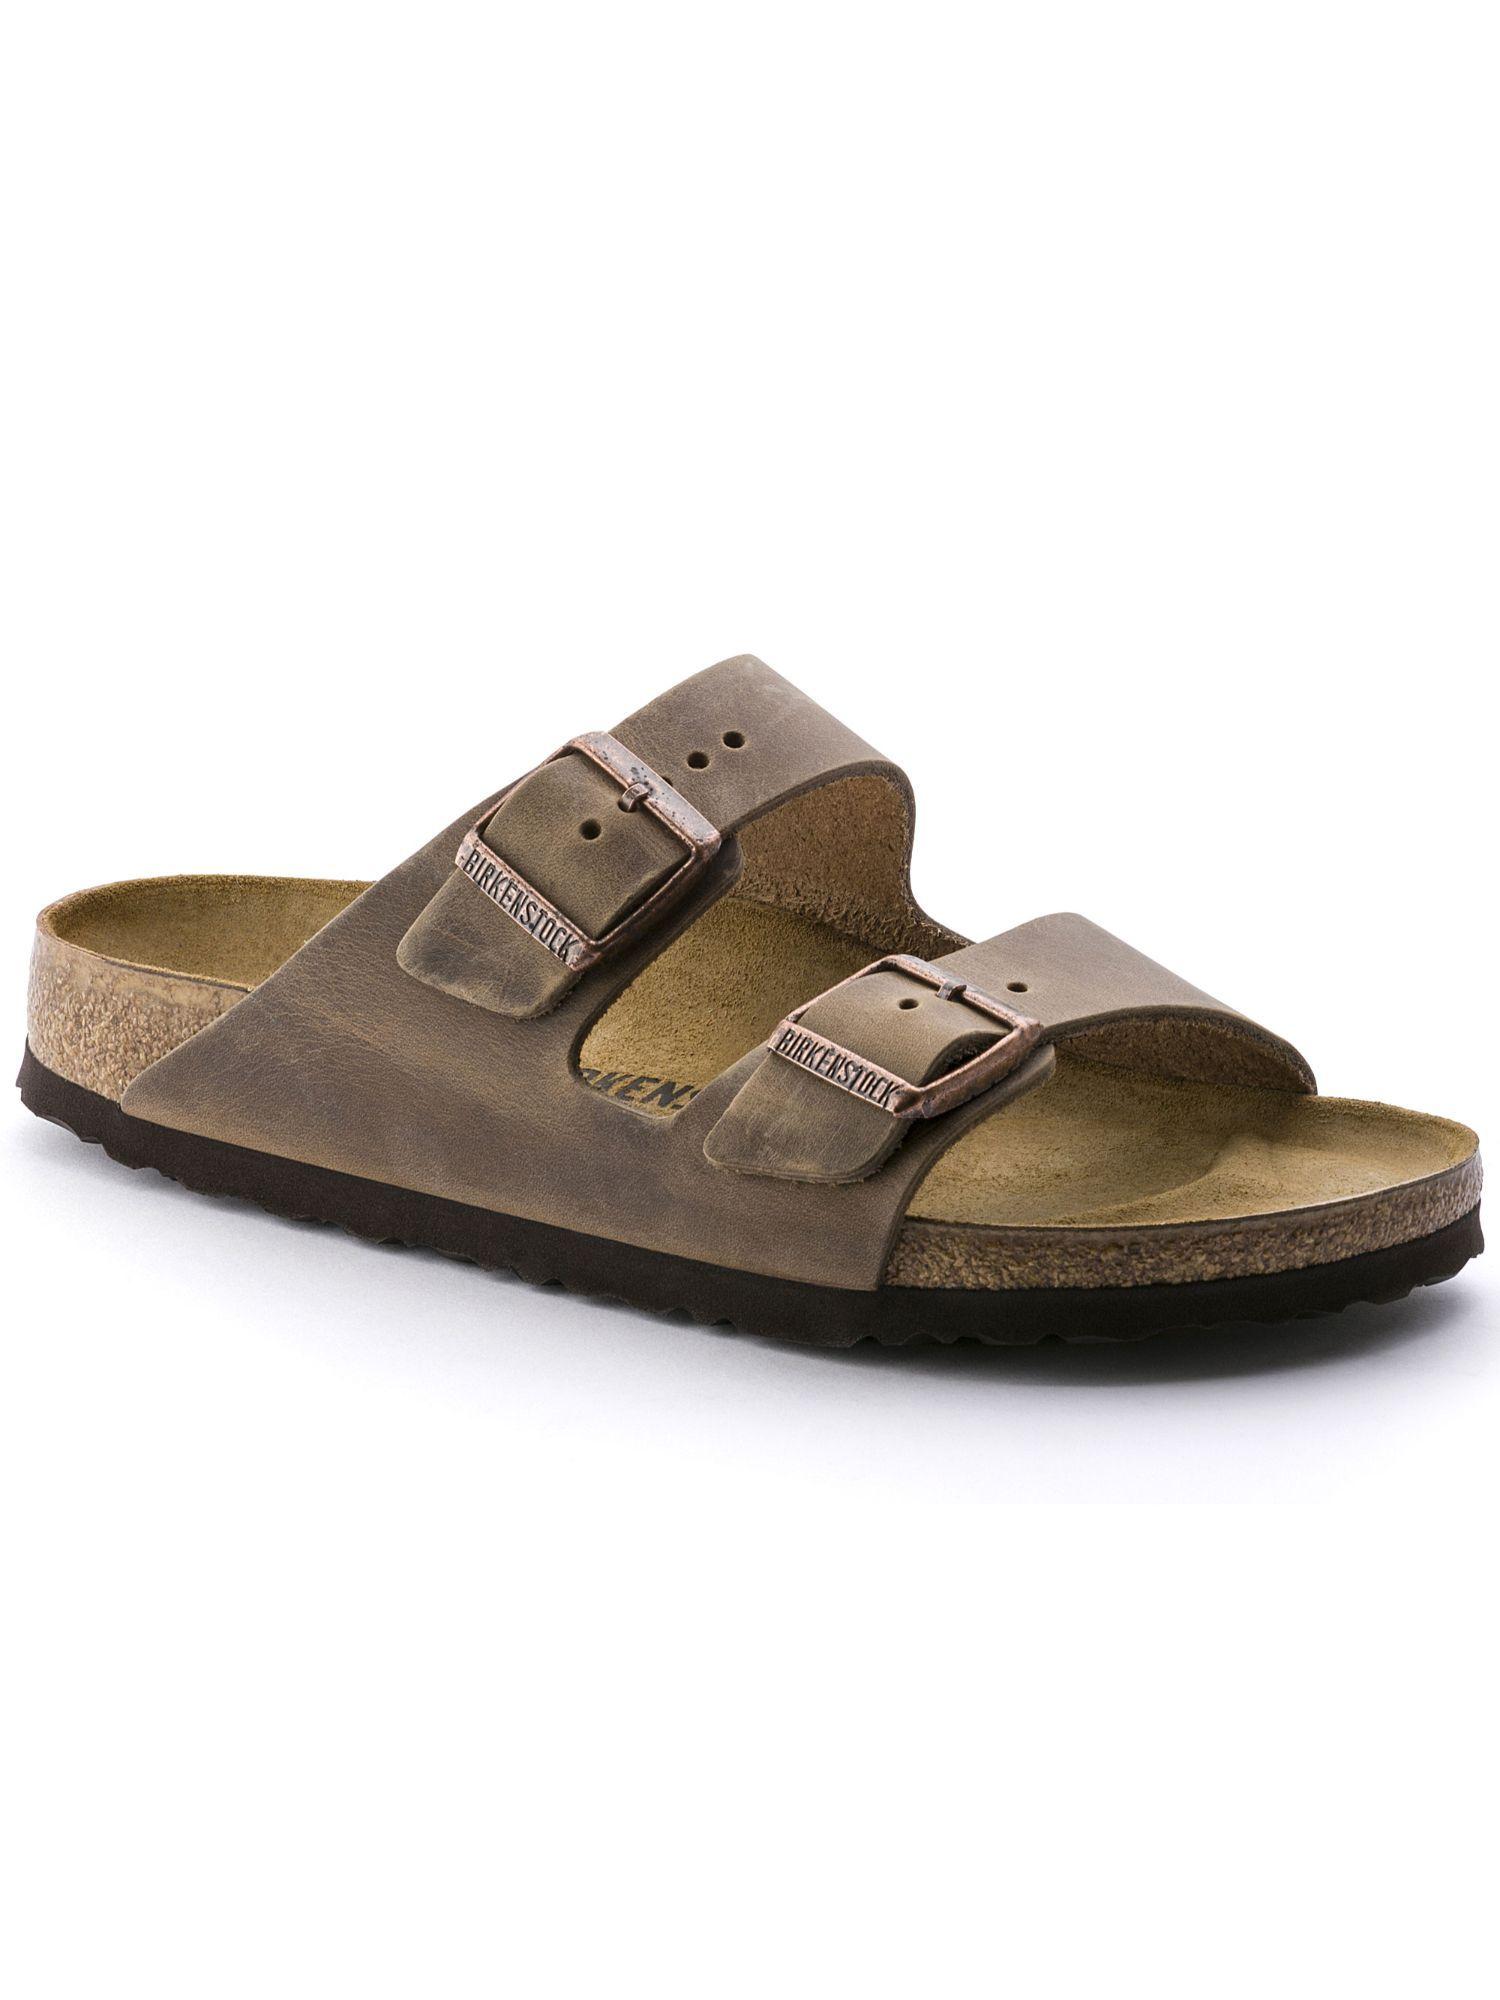 arizona oiled leather narrow width brown sandals